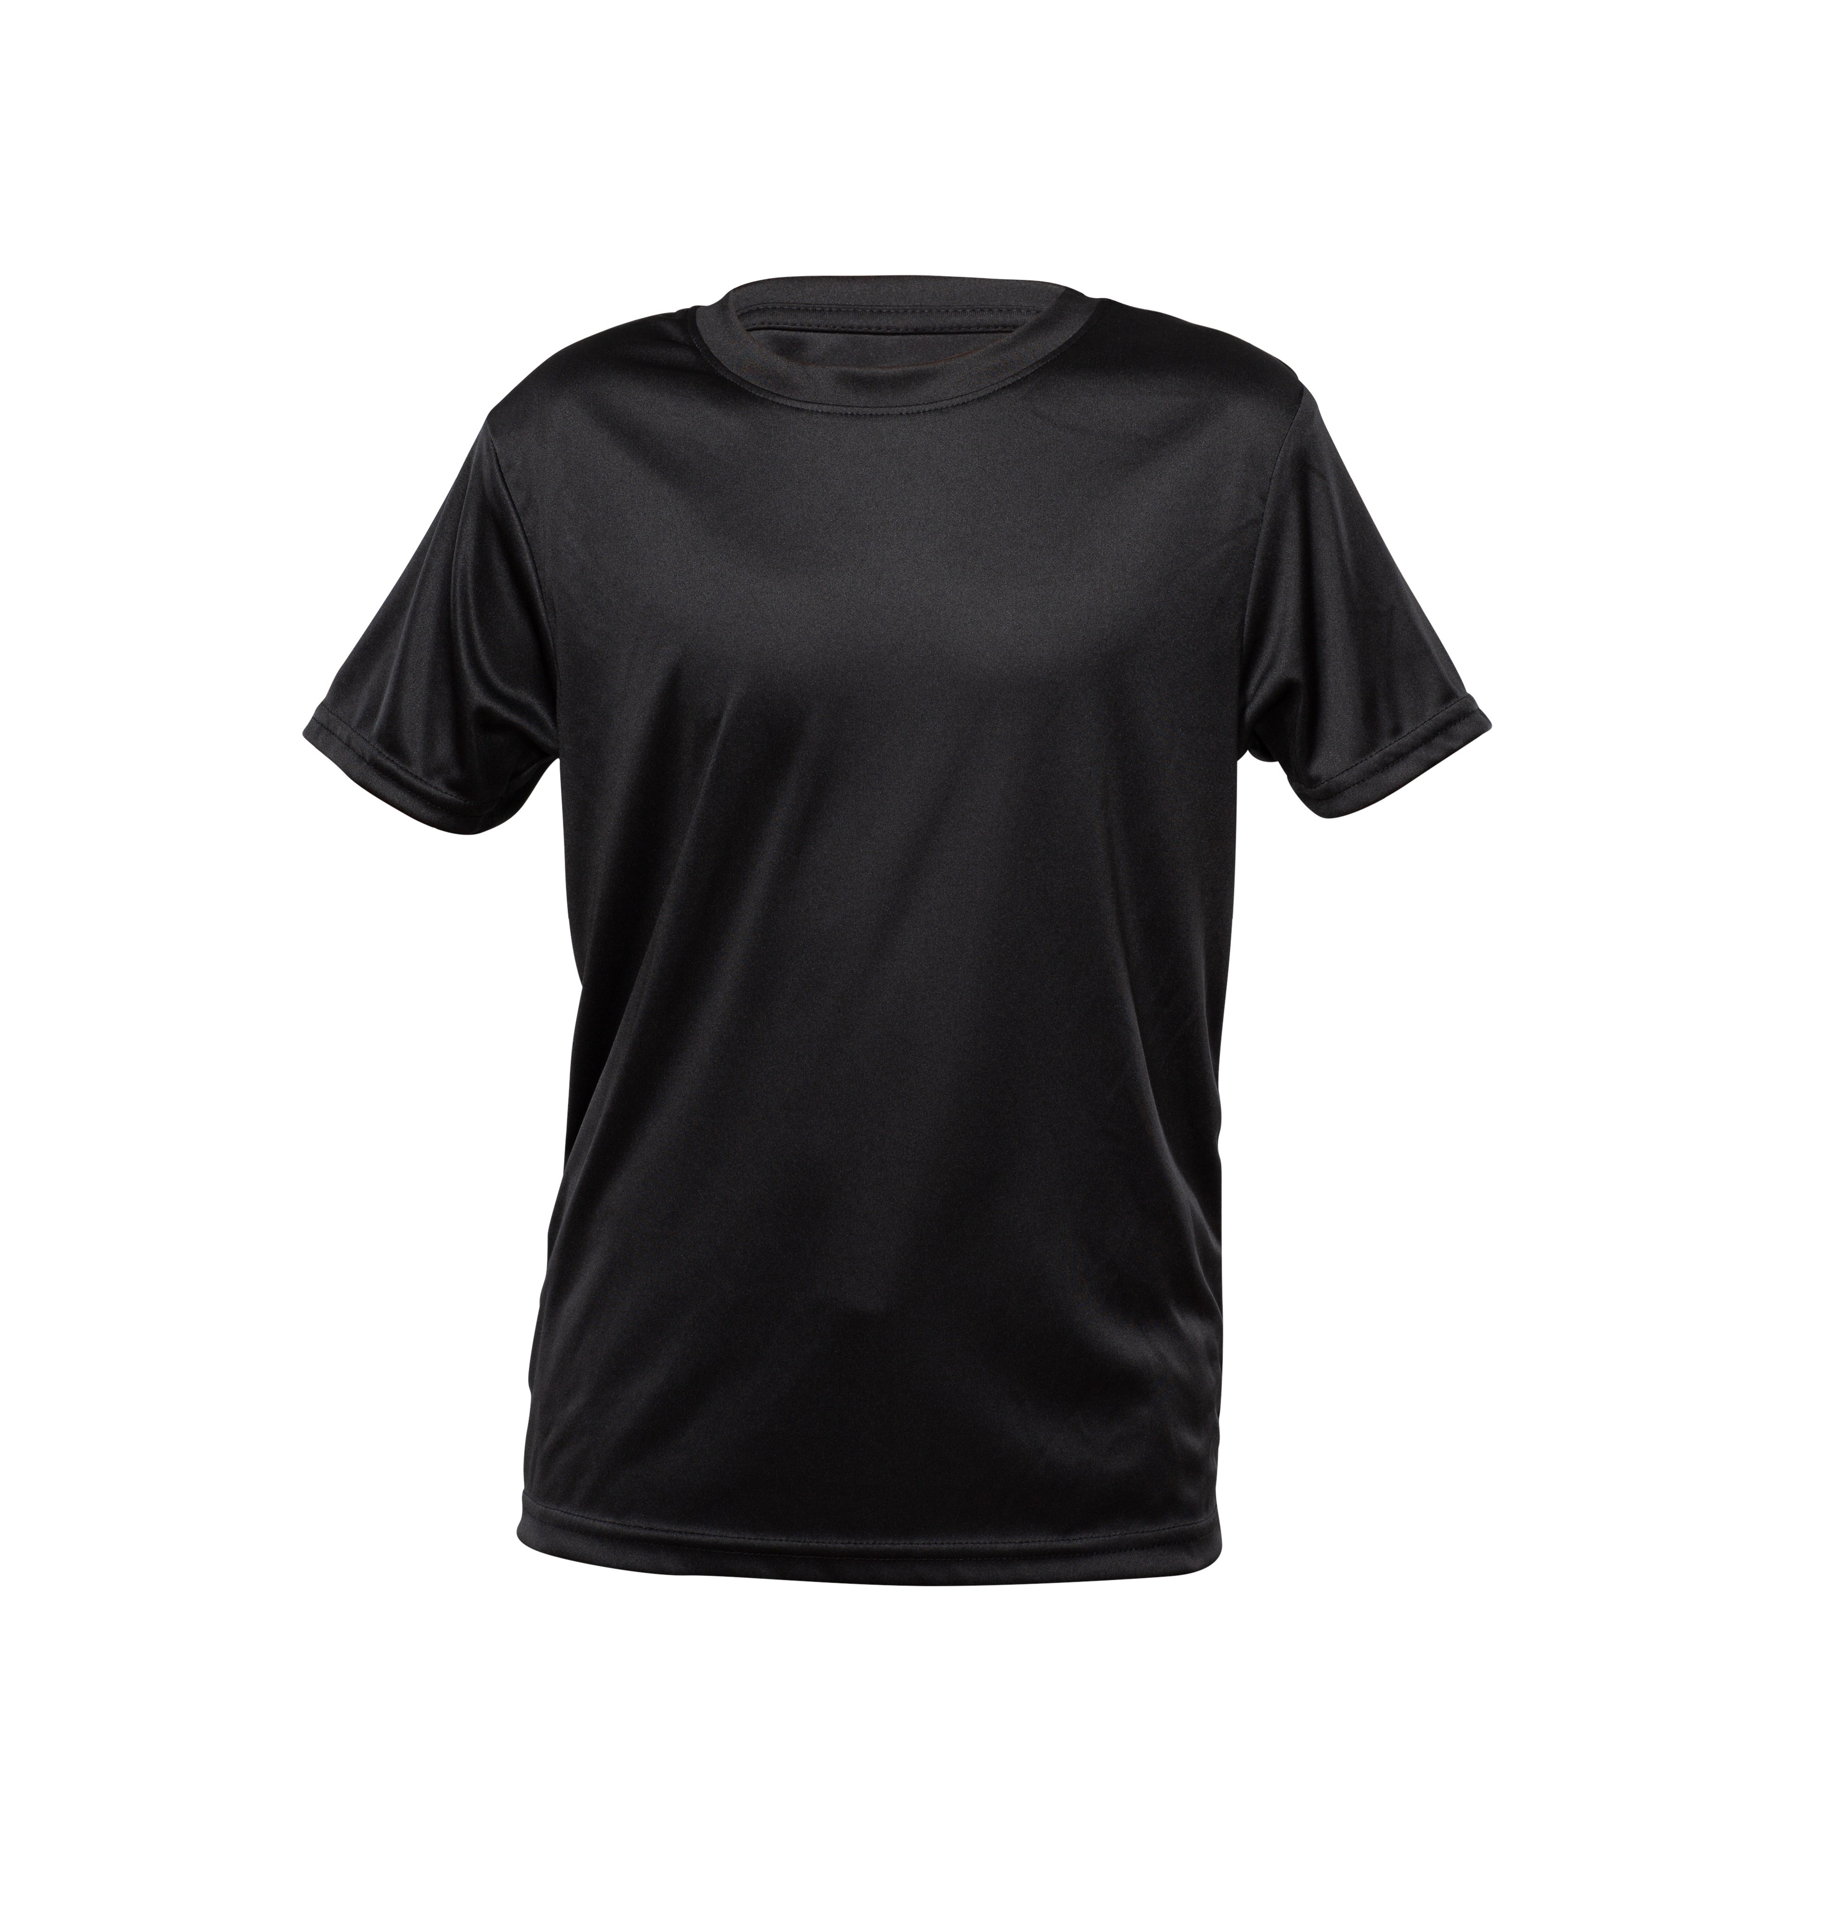 Blankactivewear t-shirt performance active wear vêtement blank – www ...